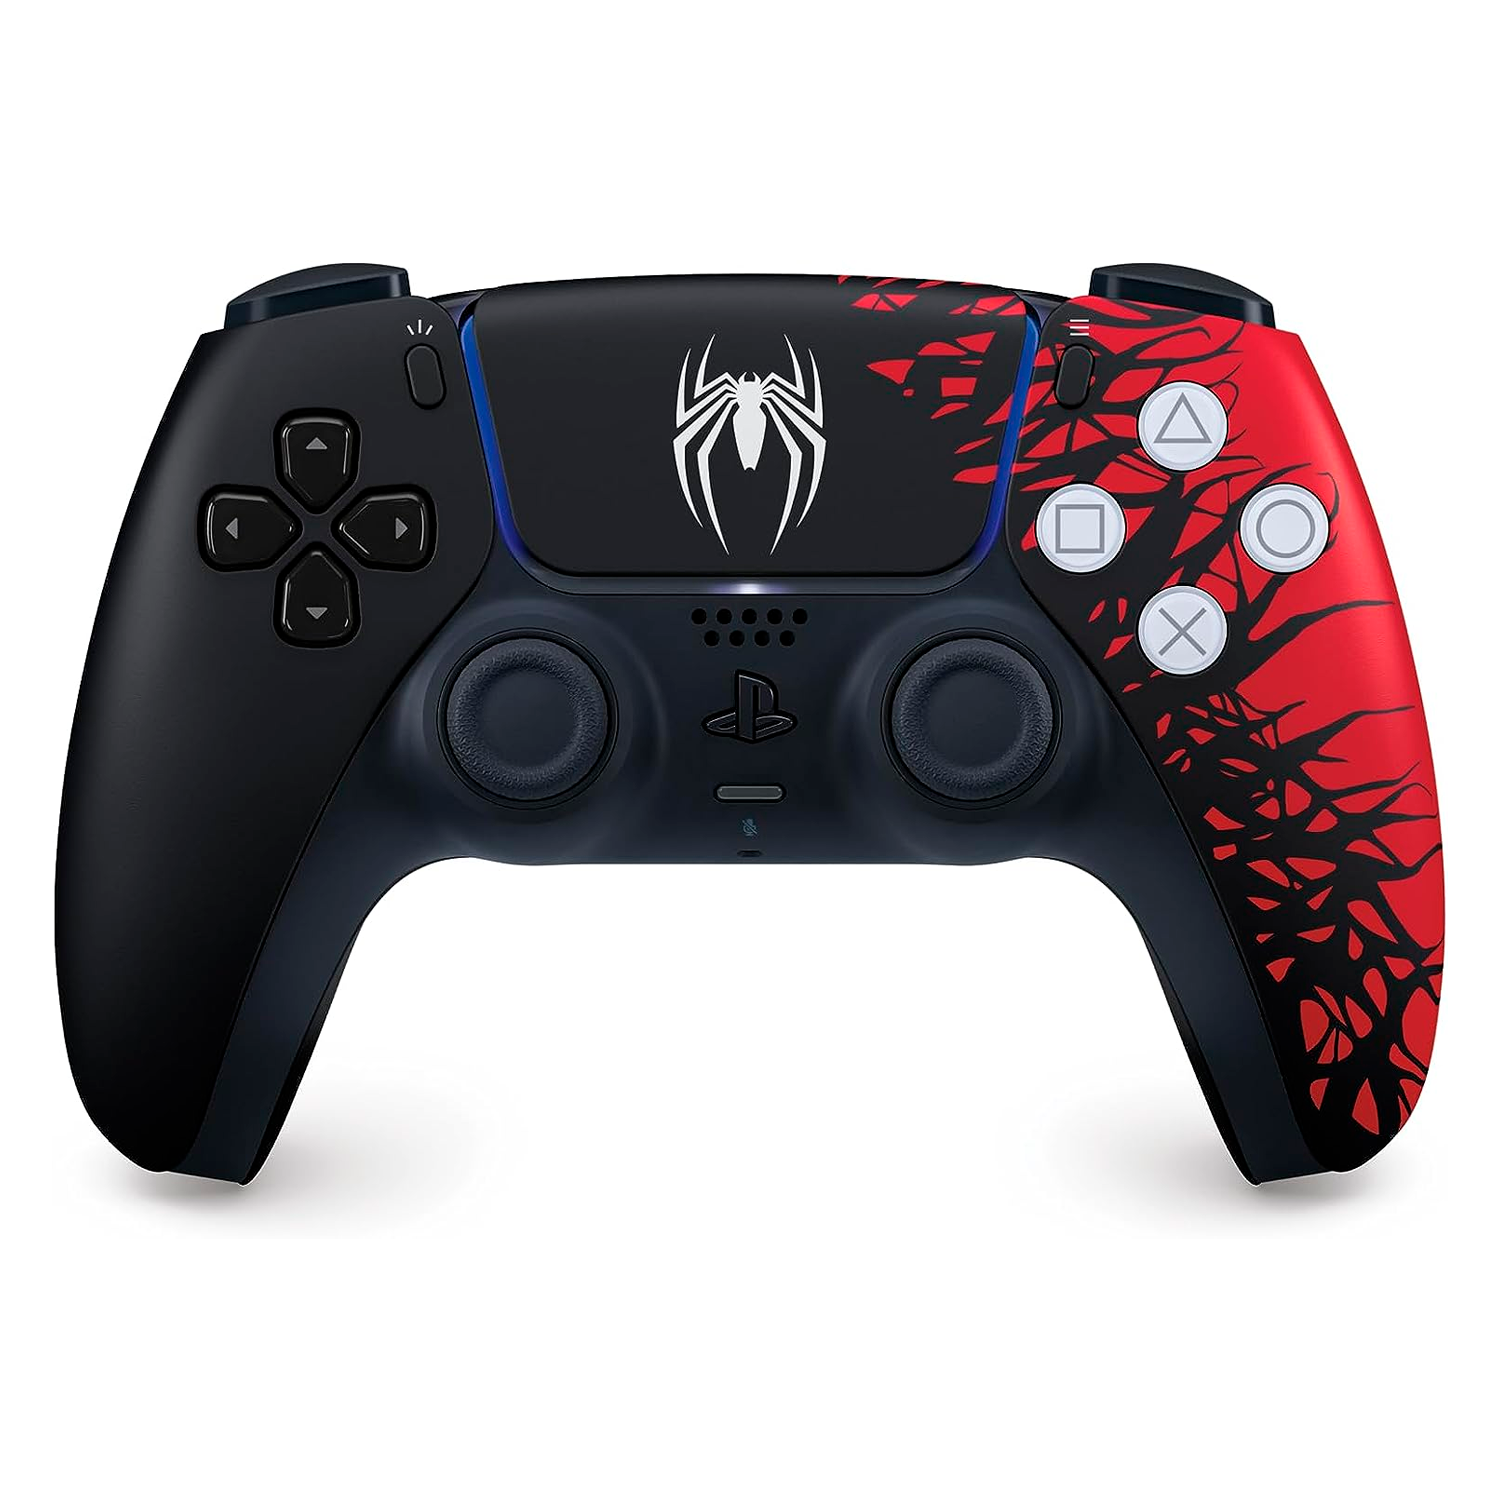 Controle Sony Dualsense para PS5 Wireless - Spider Man 2 Limited Edition no  Paraguai - Atacado Games - Paraguay